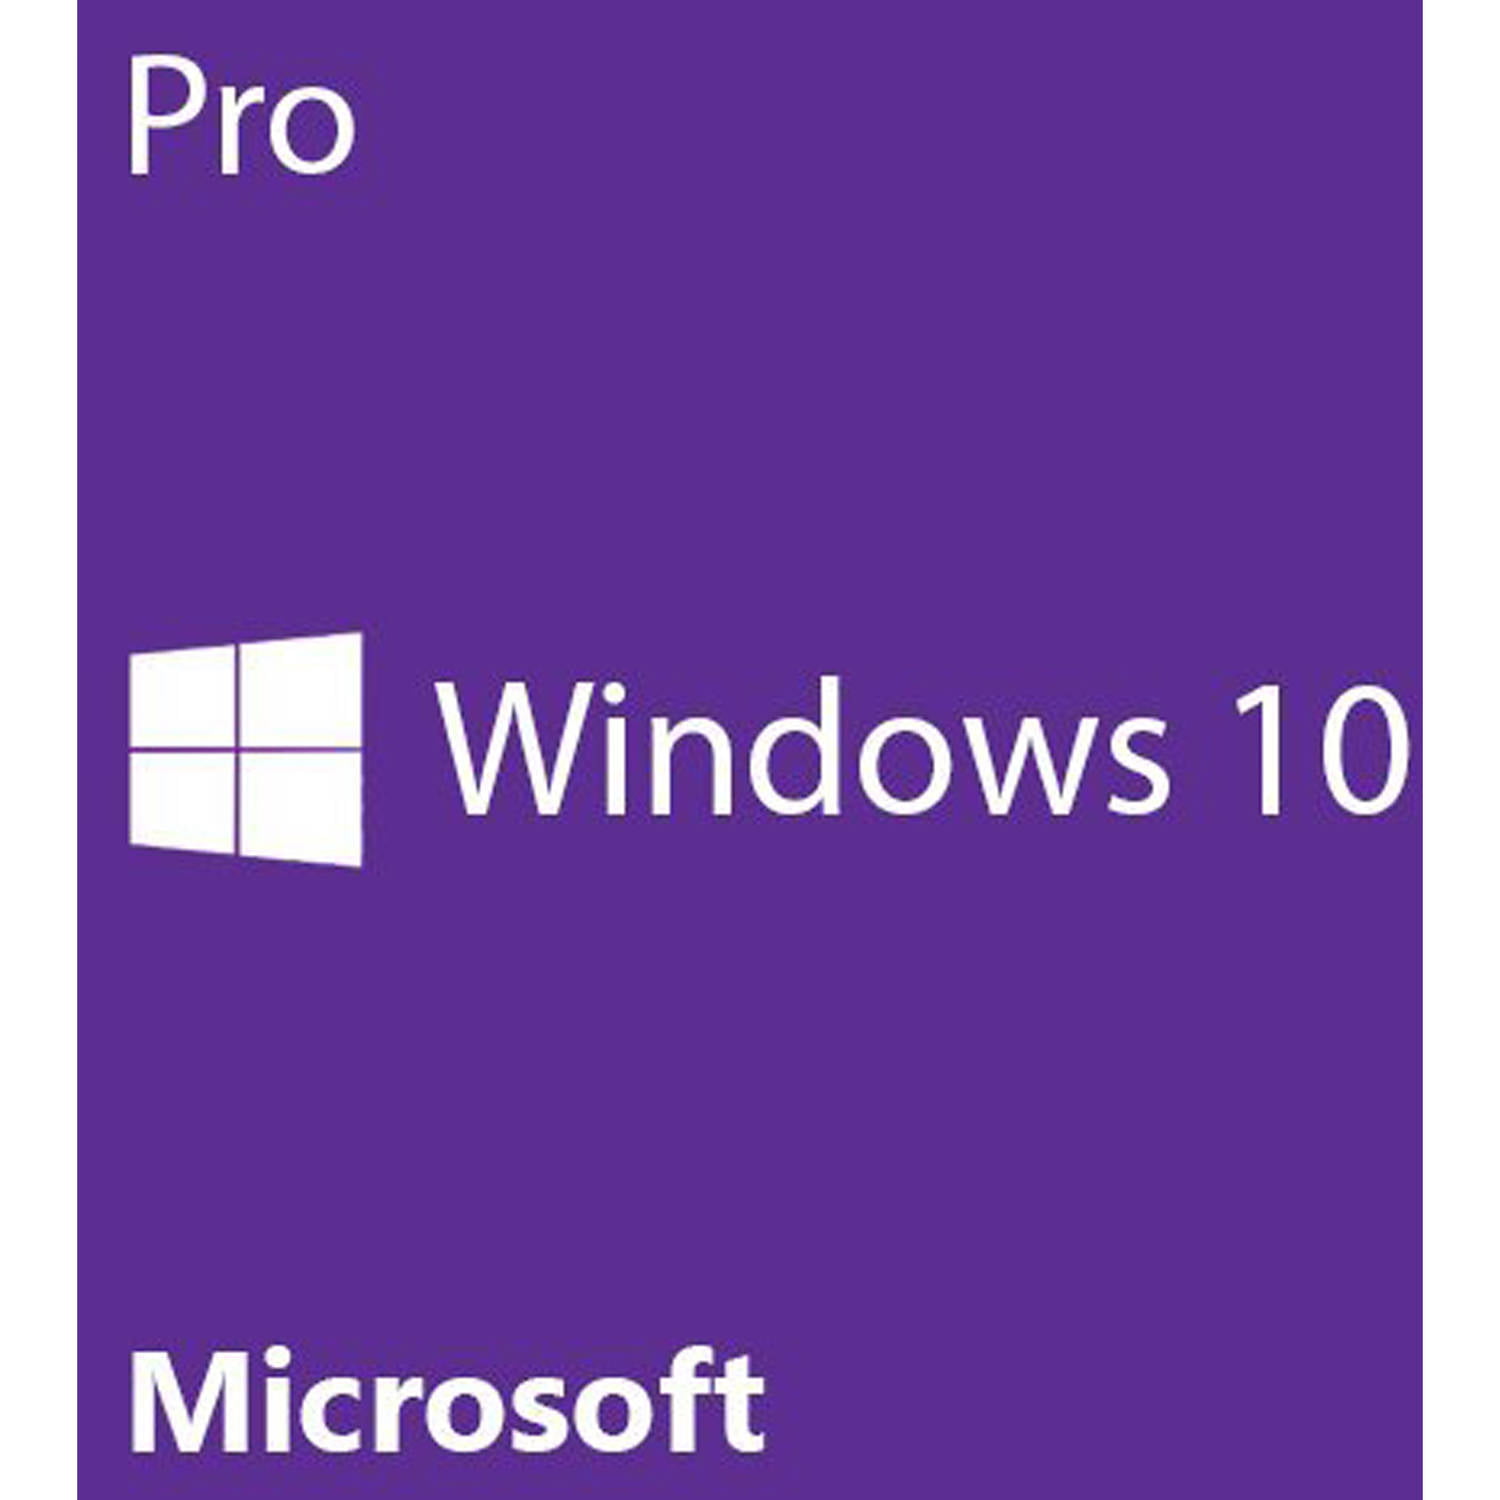 windows 10 64 bit free download